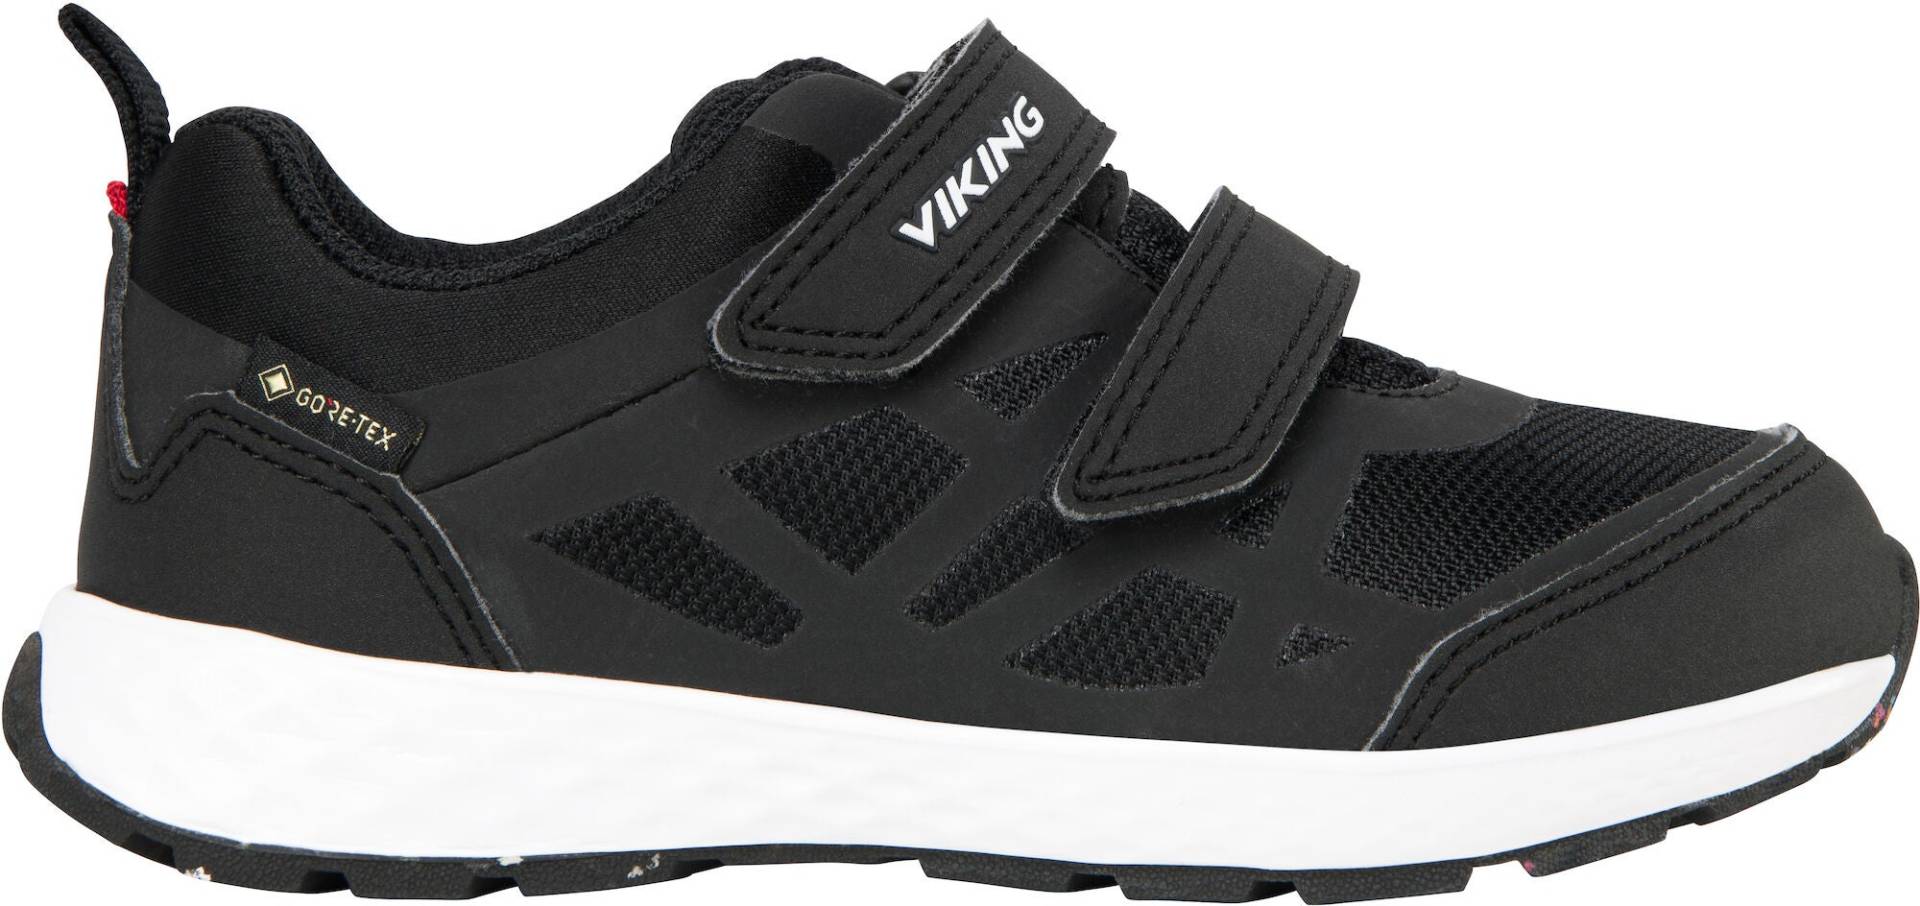 Viking Veme Reflex 2V GTX Kinder Sneakers, Black, 25, Kinderschuhe von Viking